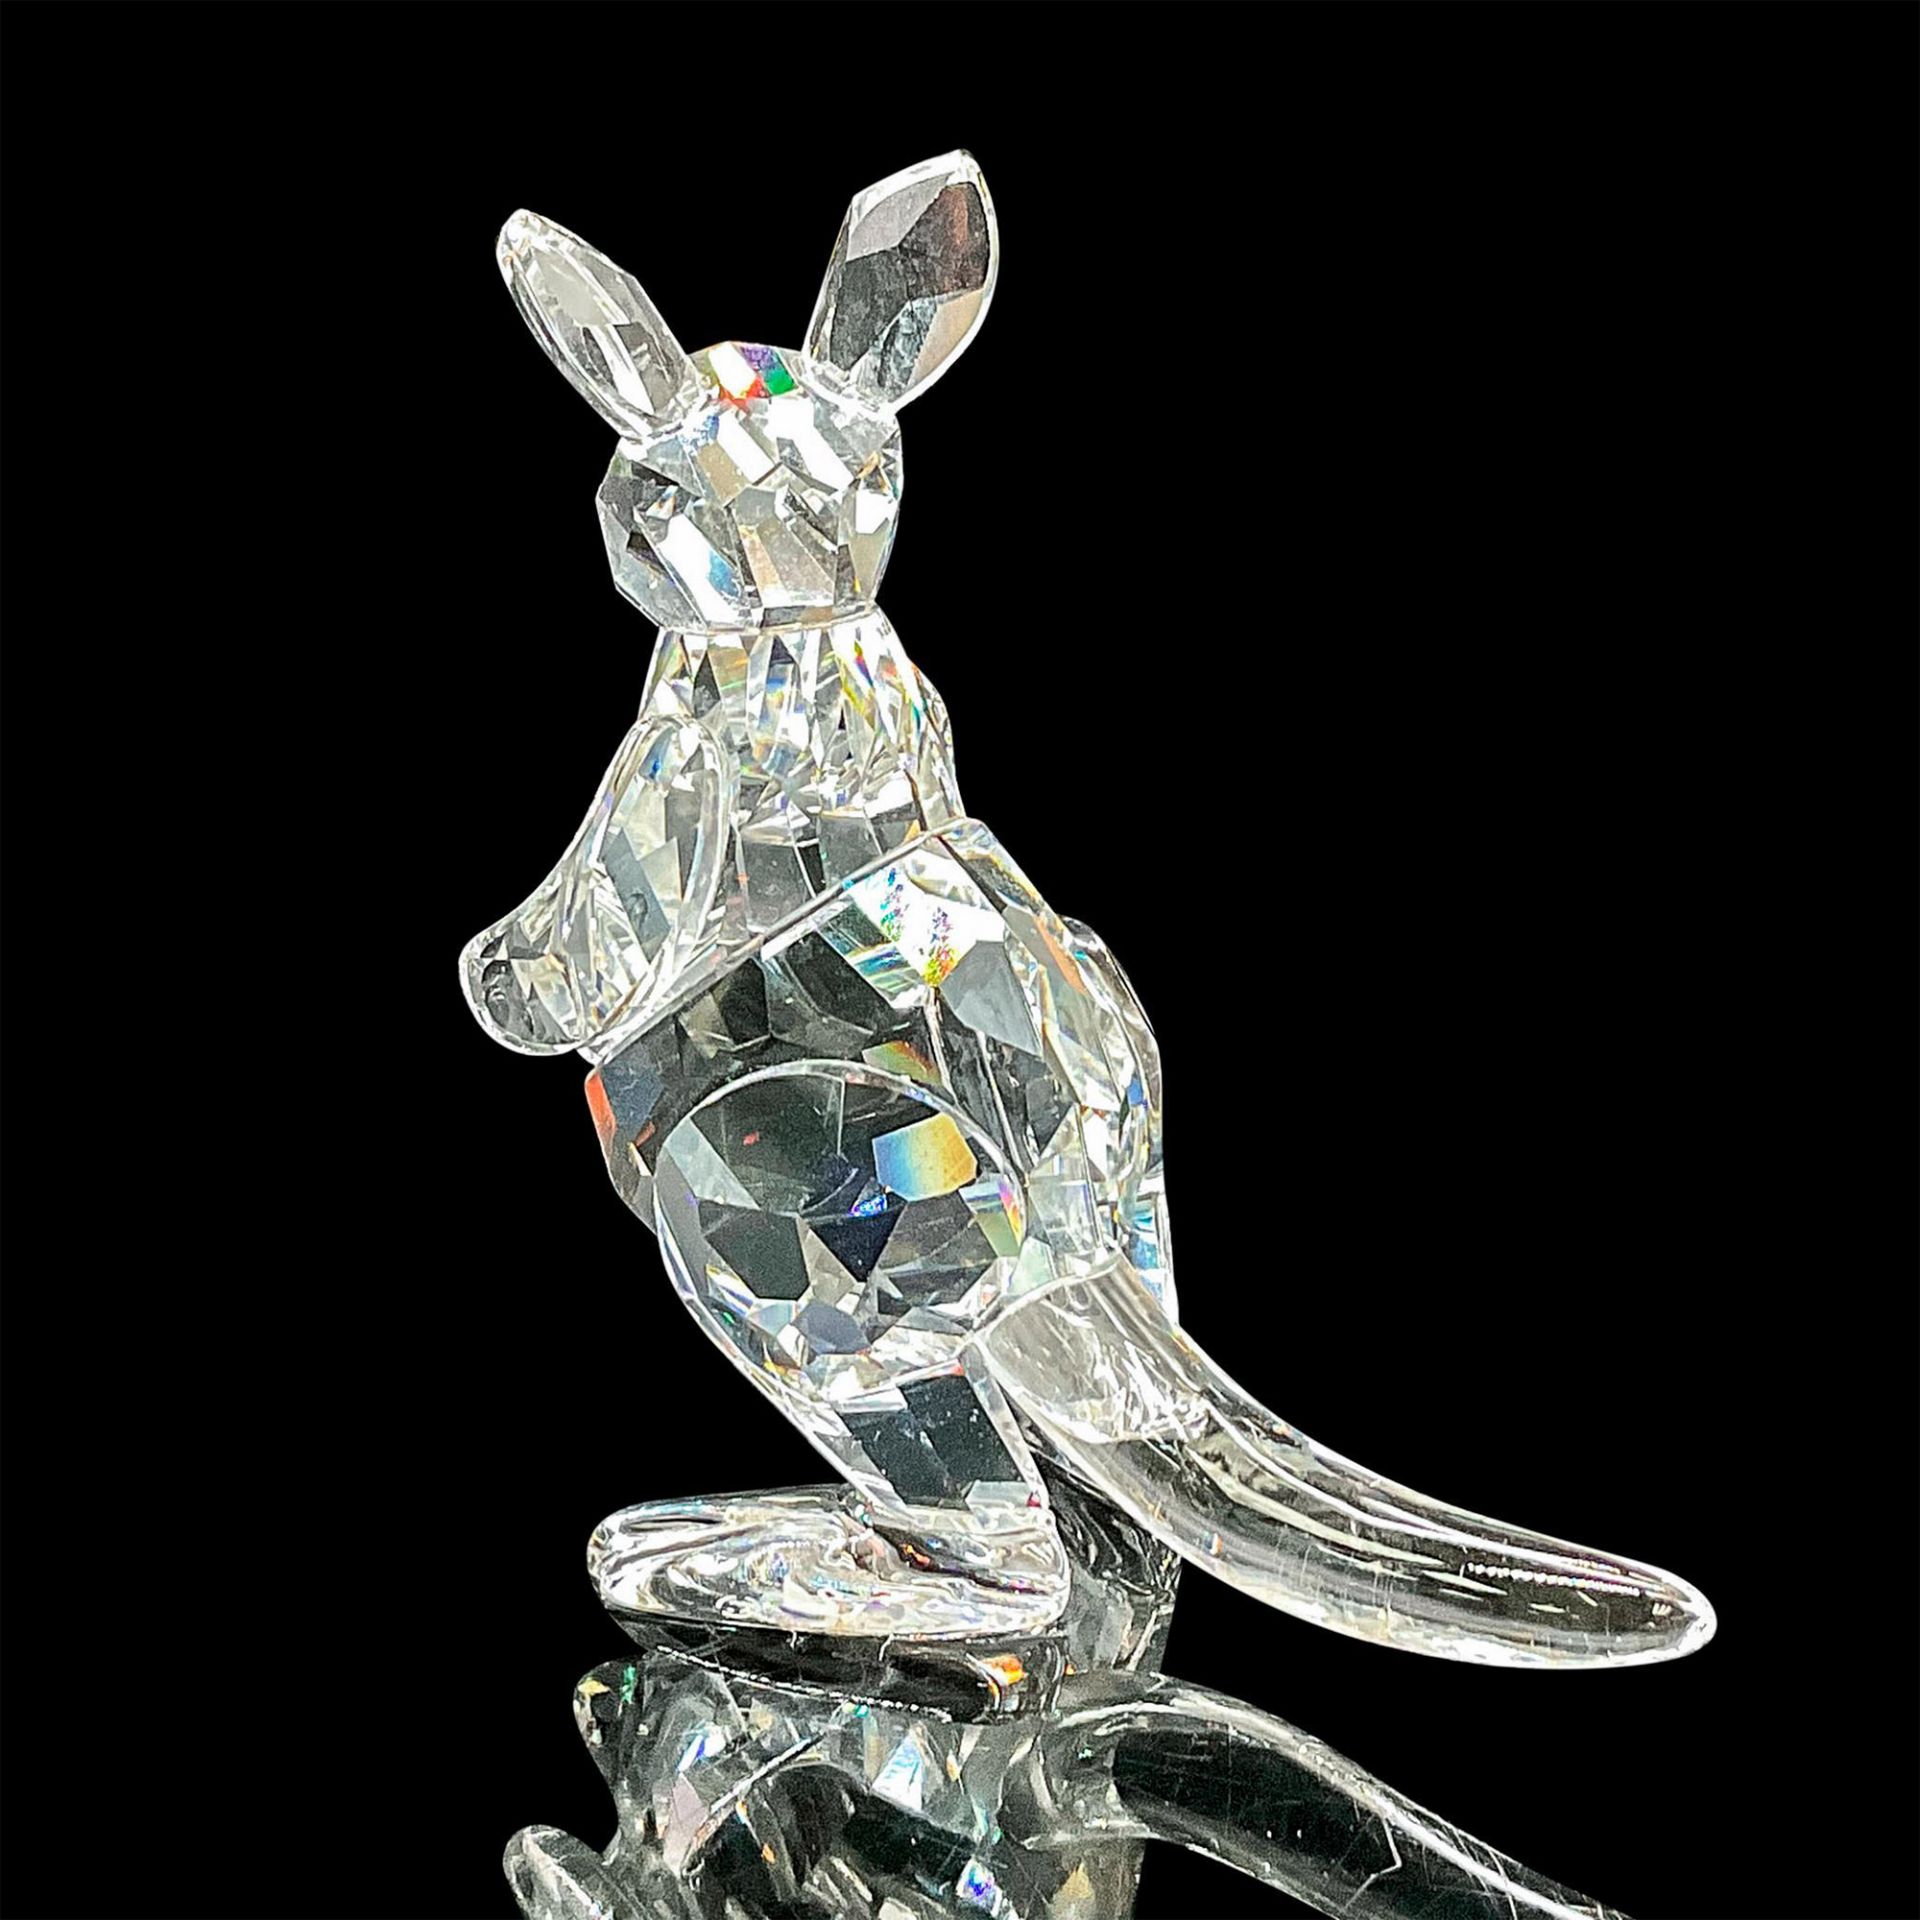 Swarovski Silver Crystal Figurine, Kangaroo with Baby Joey - Image 2 of 4